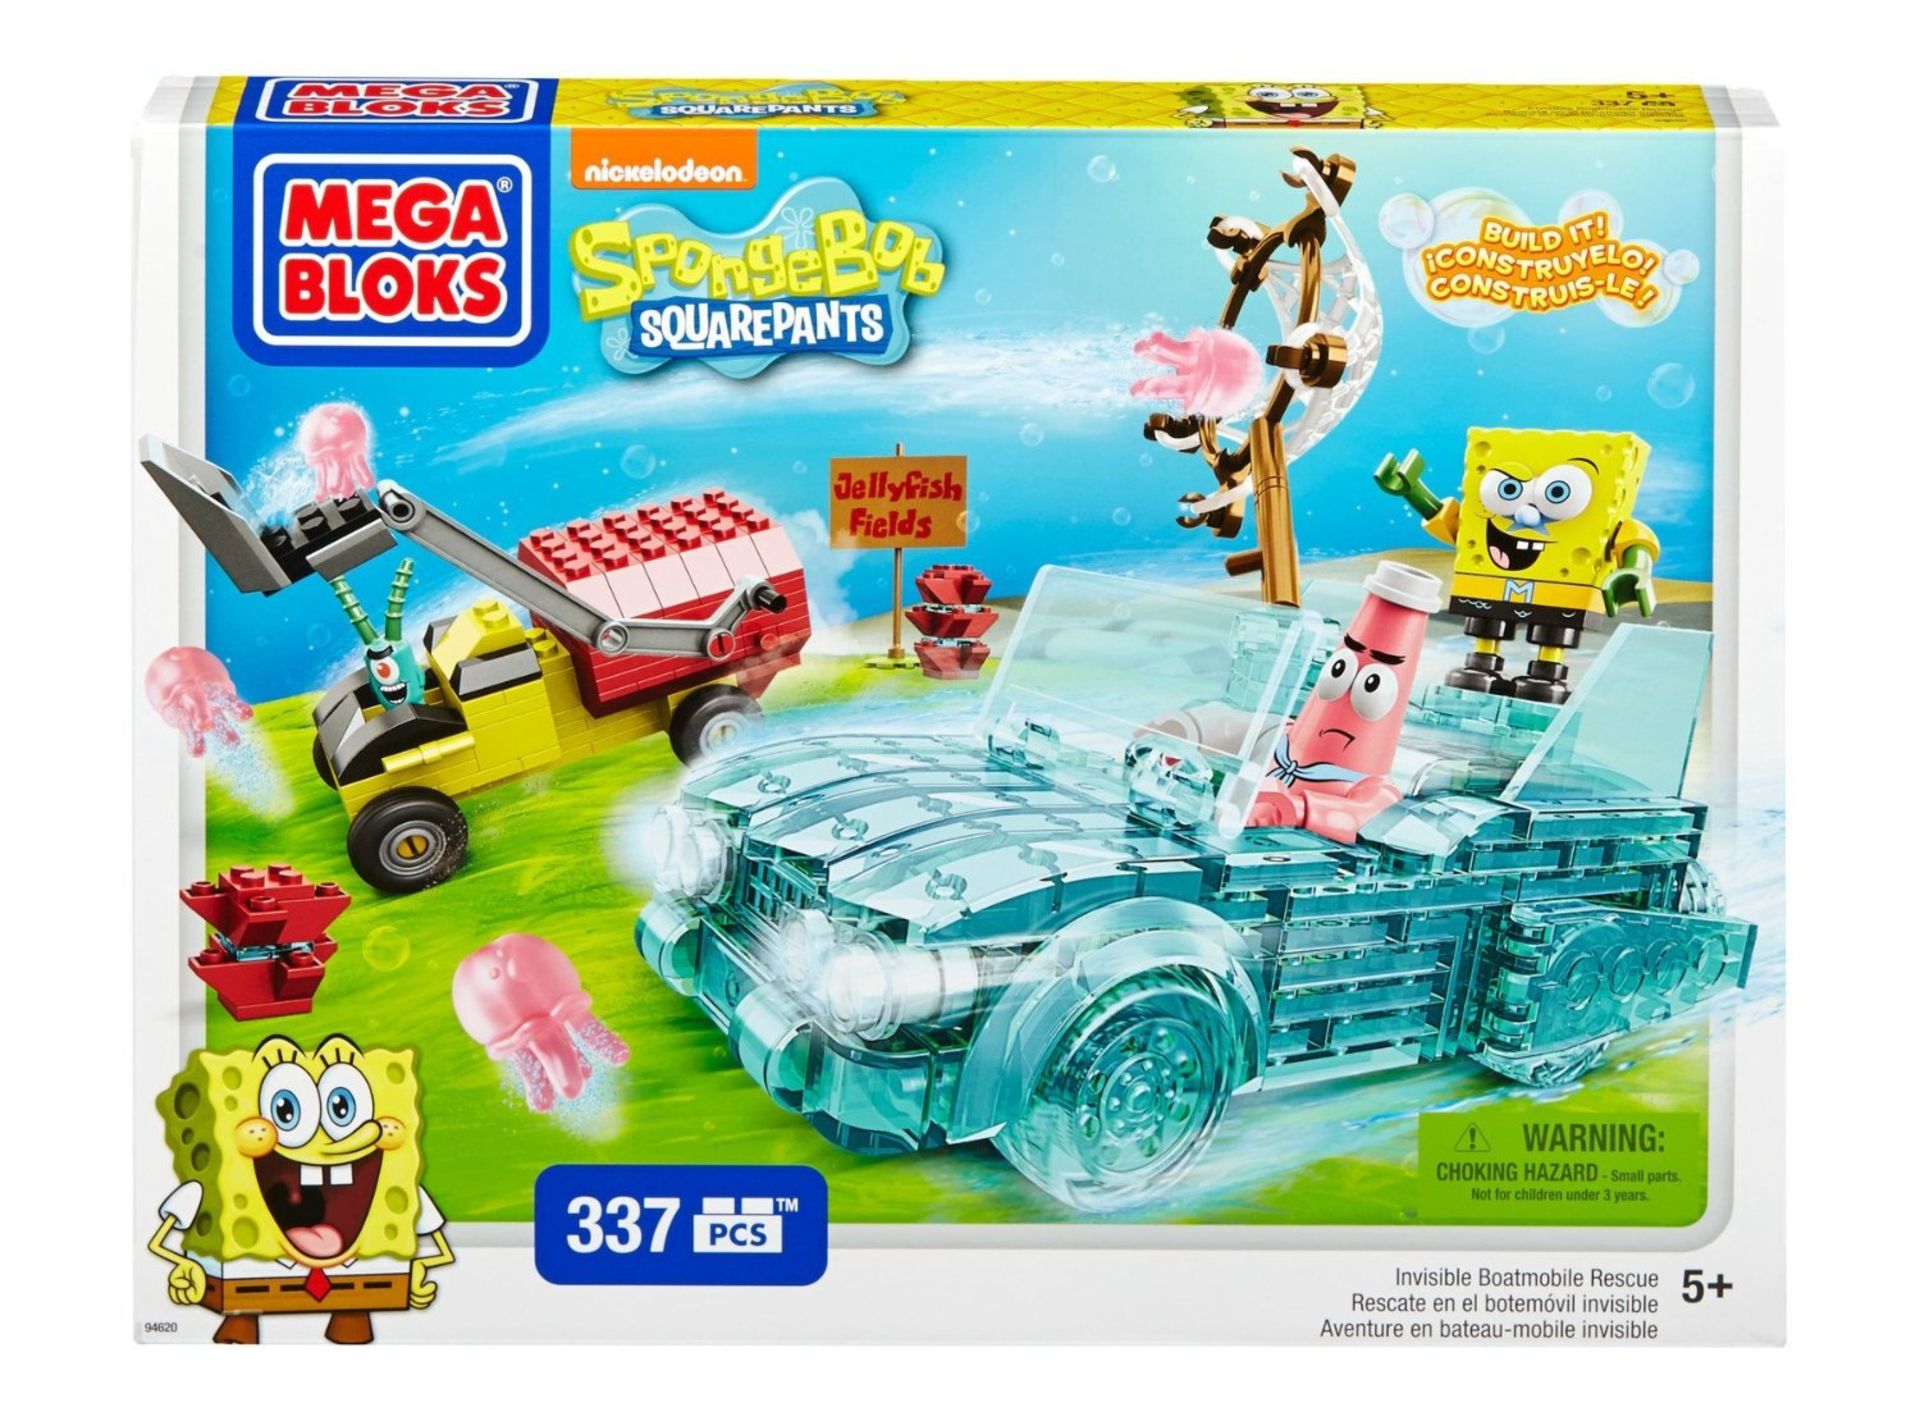 V *TRADE QTY* Brand New Mega Blocks Nickelodeon SpongeBob SquarePants Invisible Boatmobile Rescue